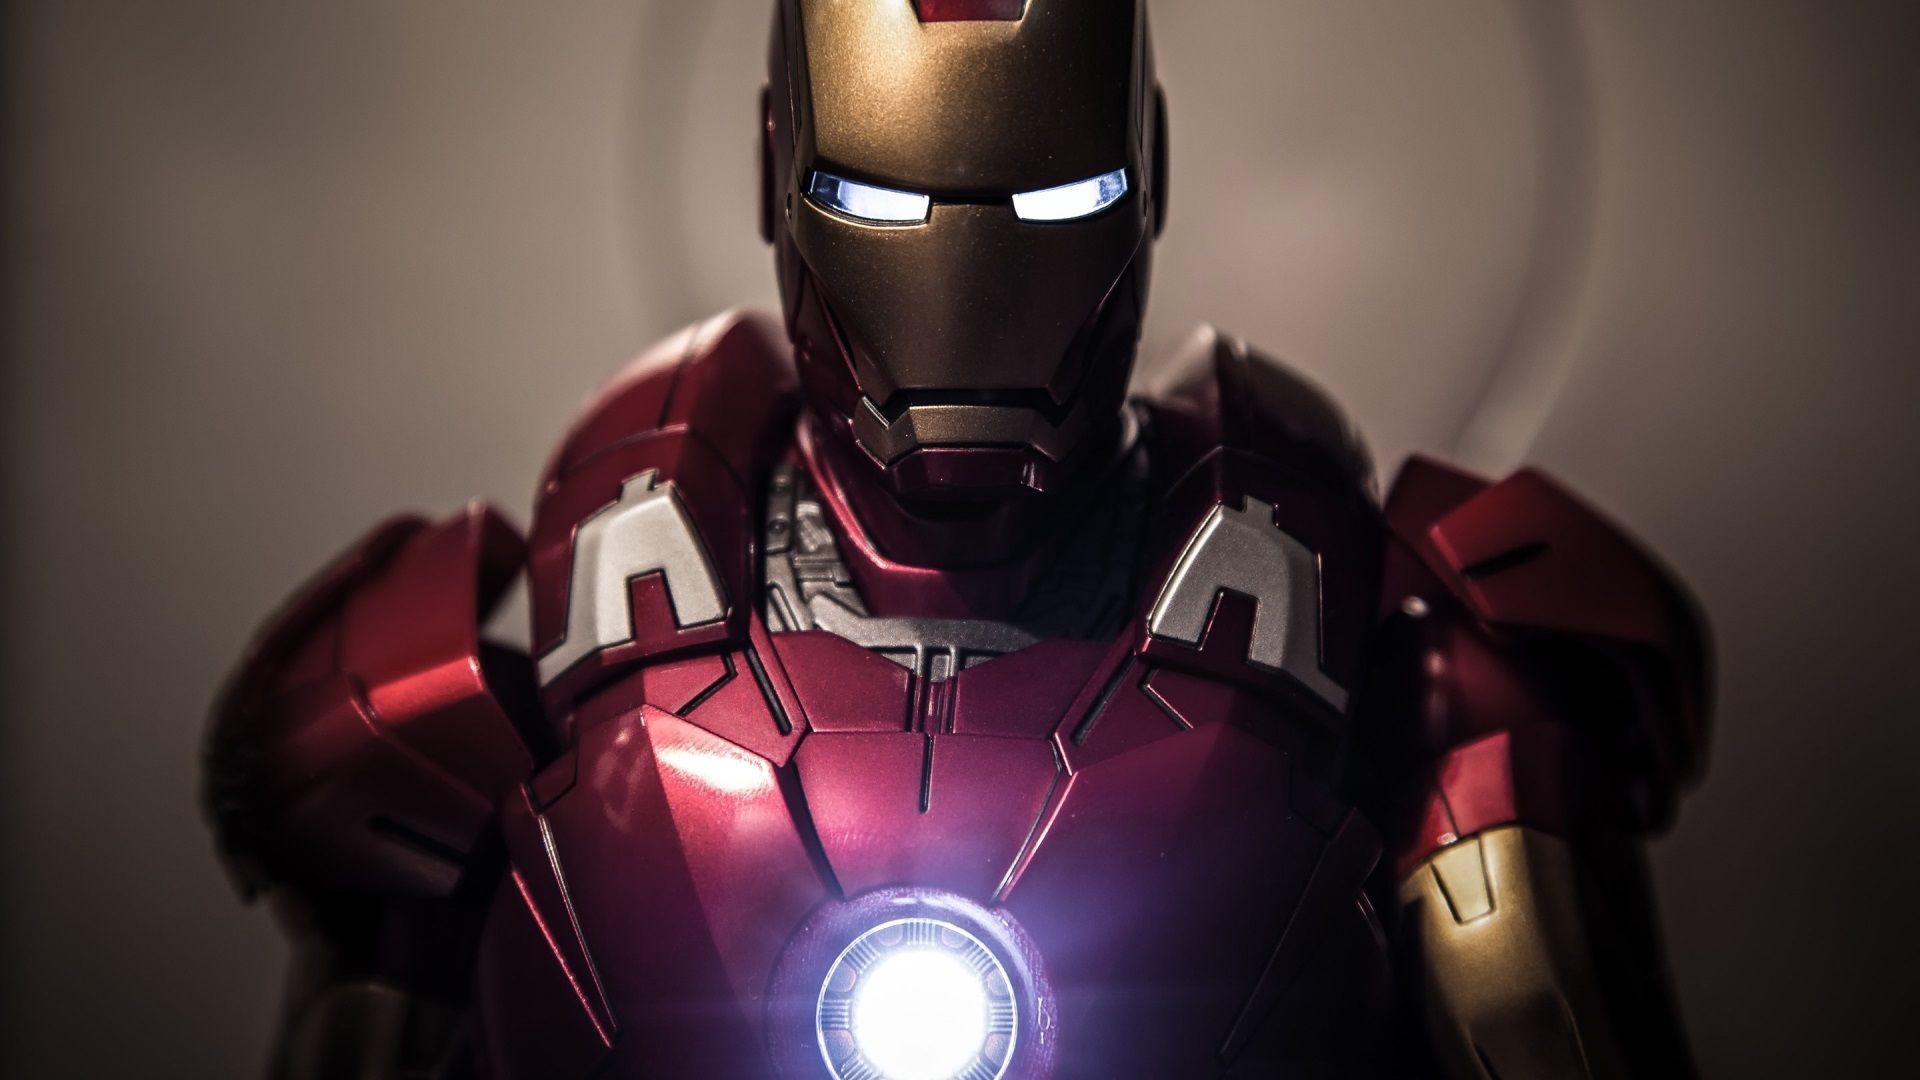 iron man image of best wallpaper. Iron man wallpaper, Iron man HD wallpaper, Iron man